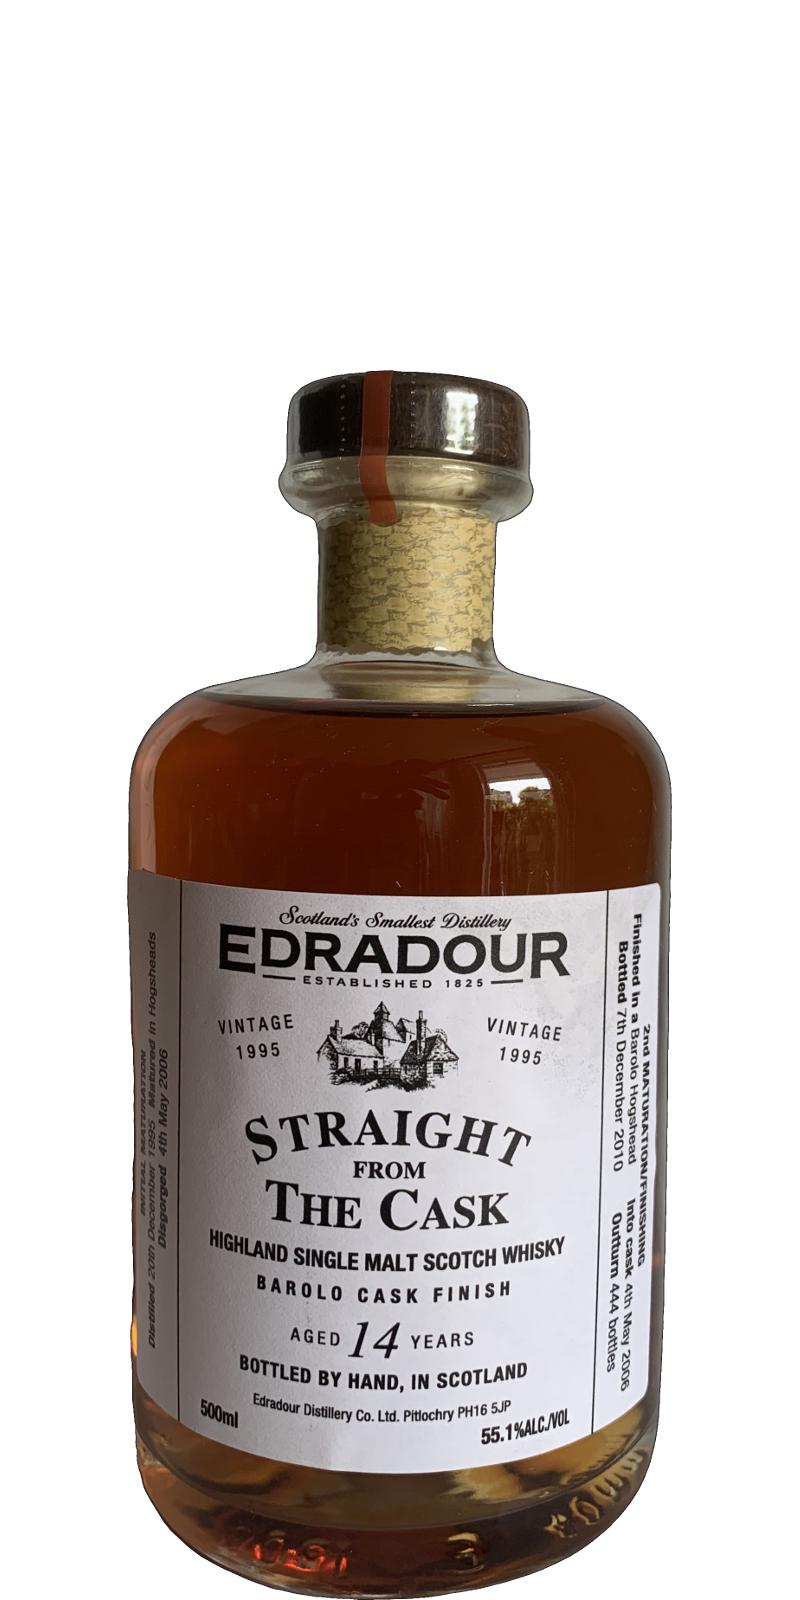 Edradour 1995 Straight from the Cask Barolo Cask Finish Hogsheads + Barolo Cask Finish 55.1% 500ml